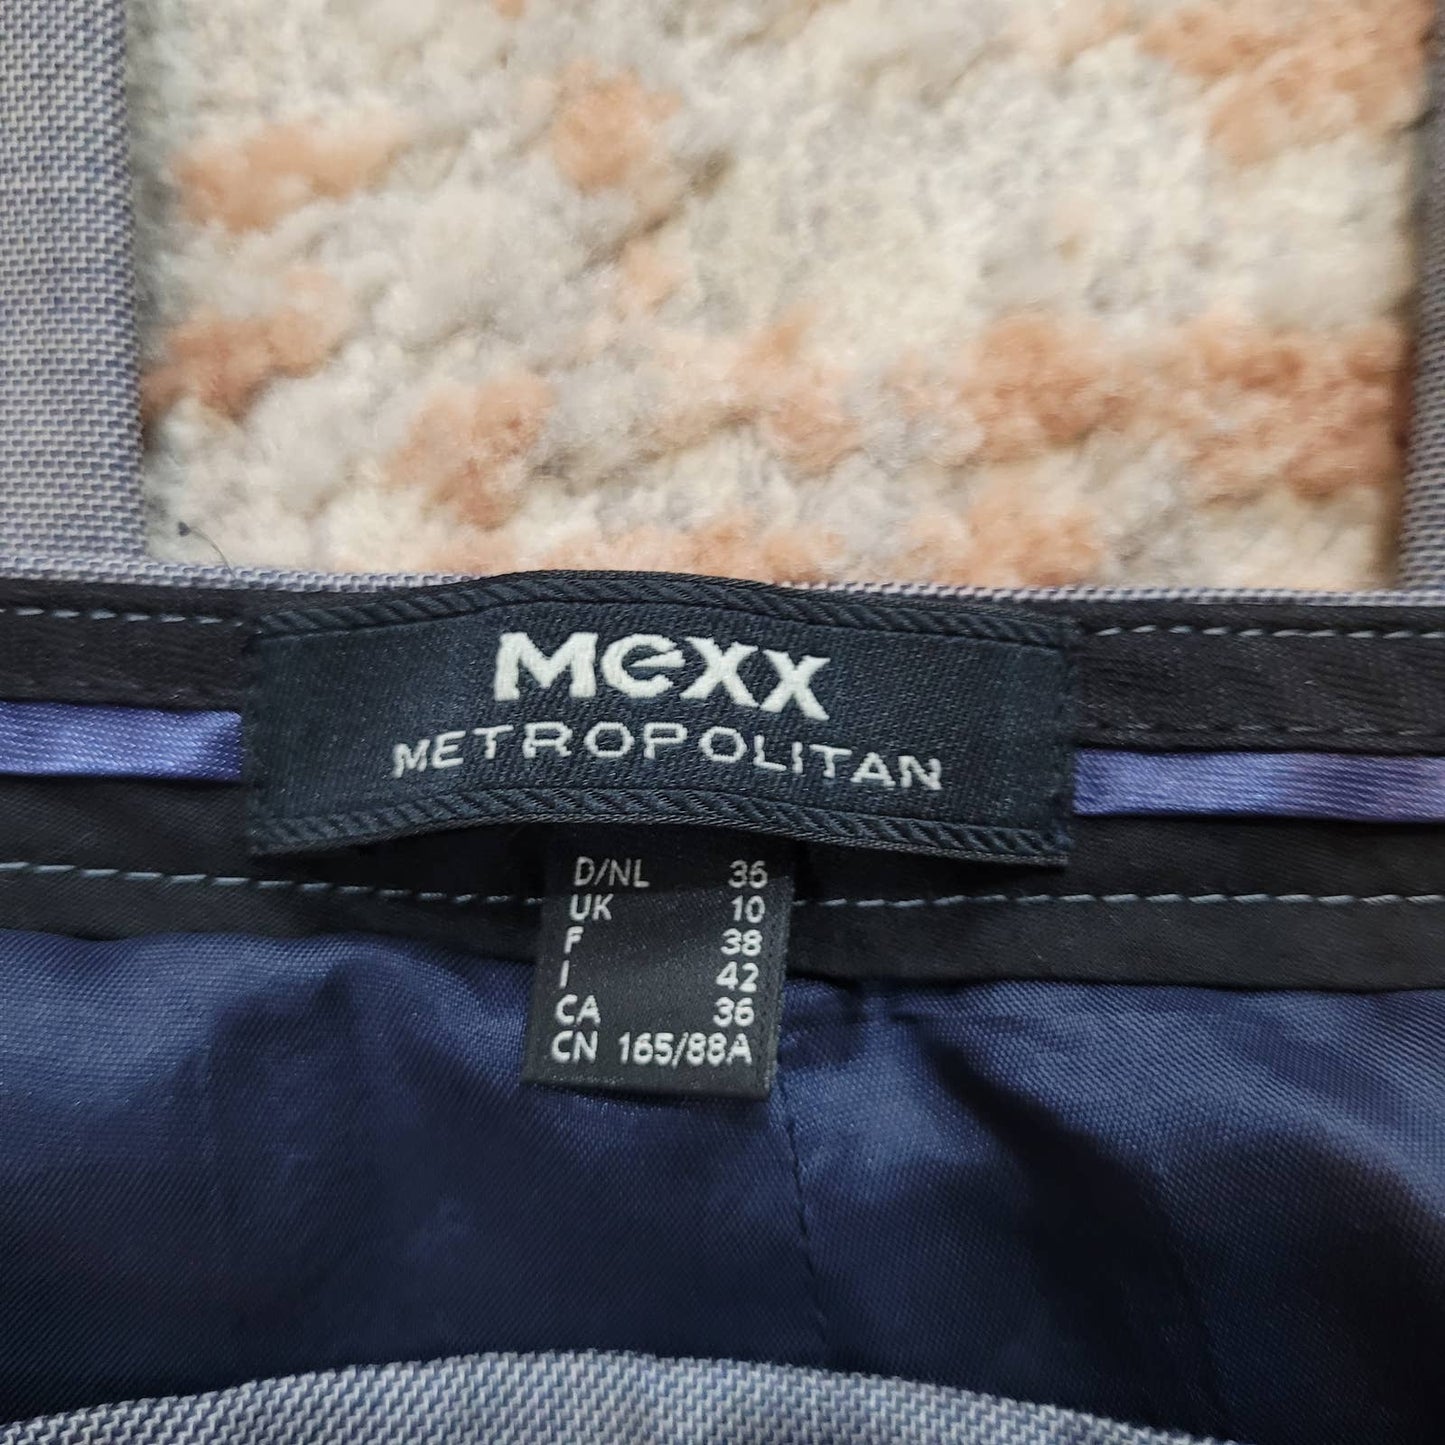 Mexx Blue Gray Dress Pants - Size Small